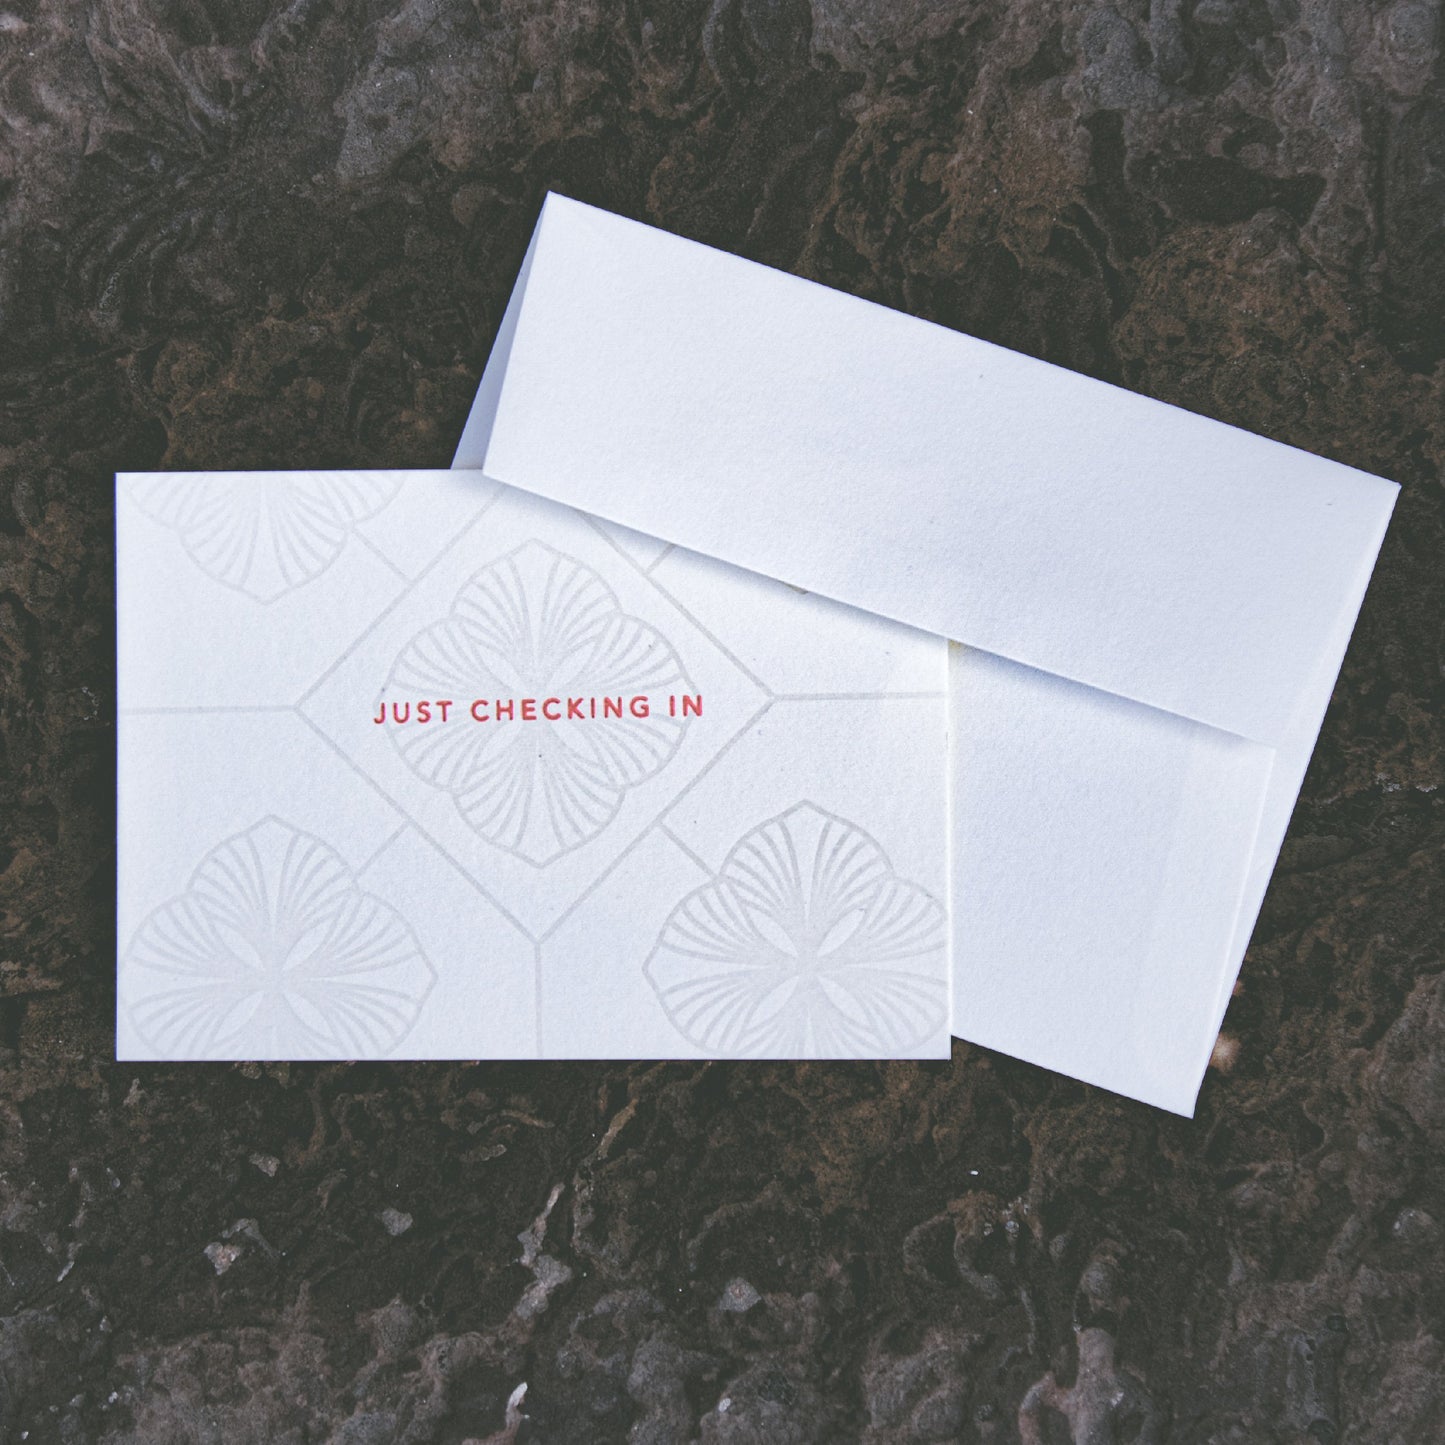 Limited Edition Letterpressed Notecard Set - Red Letter